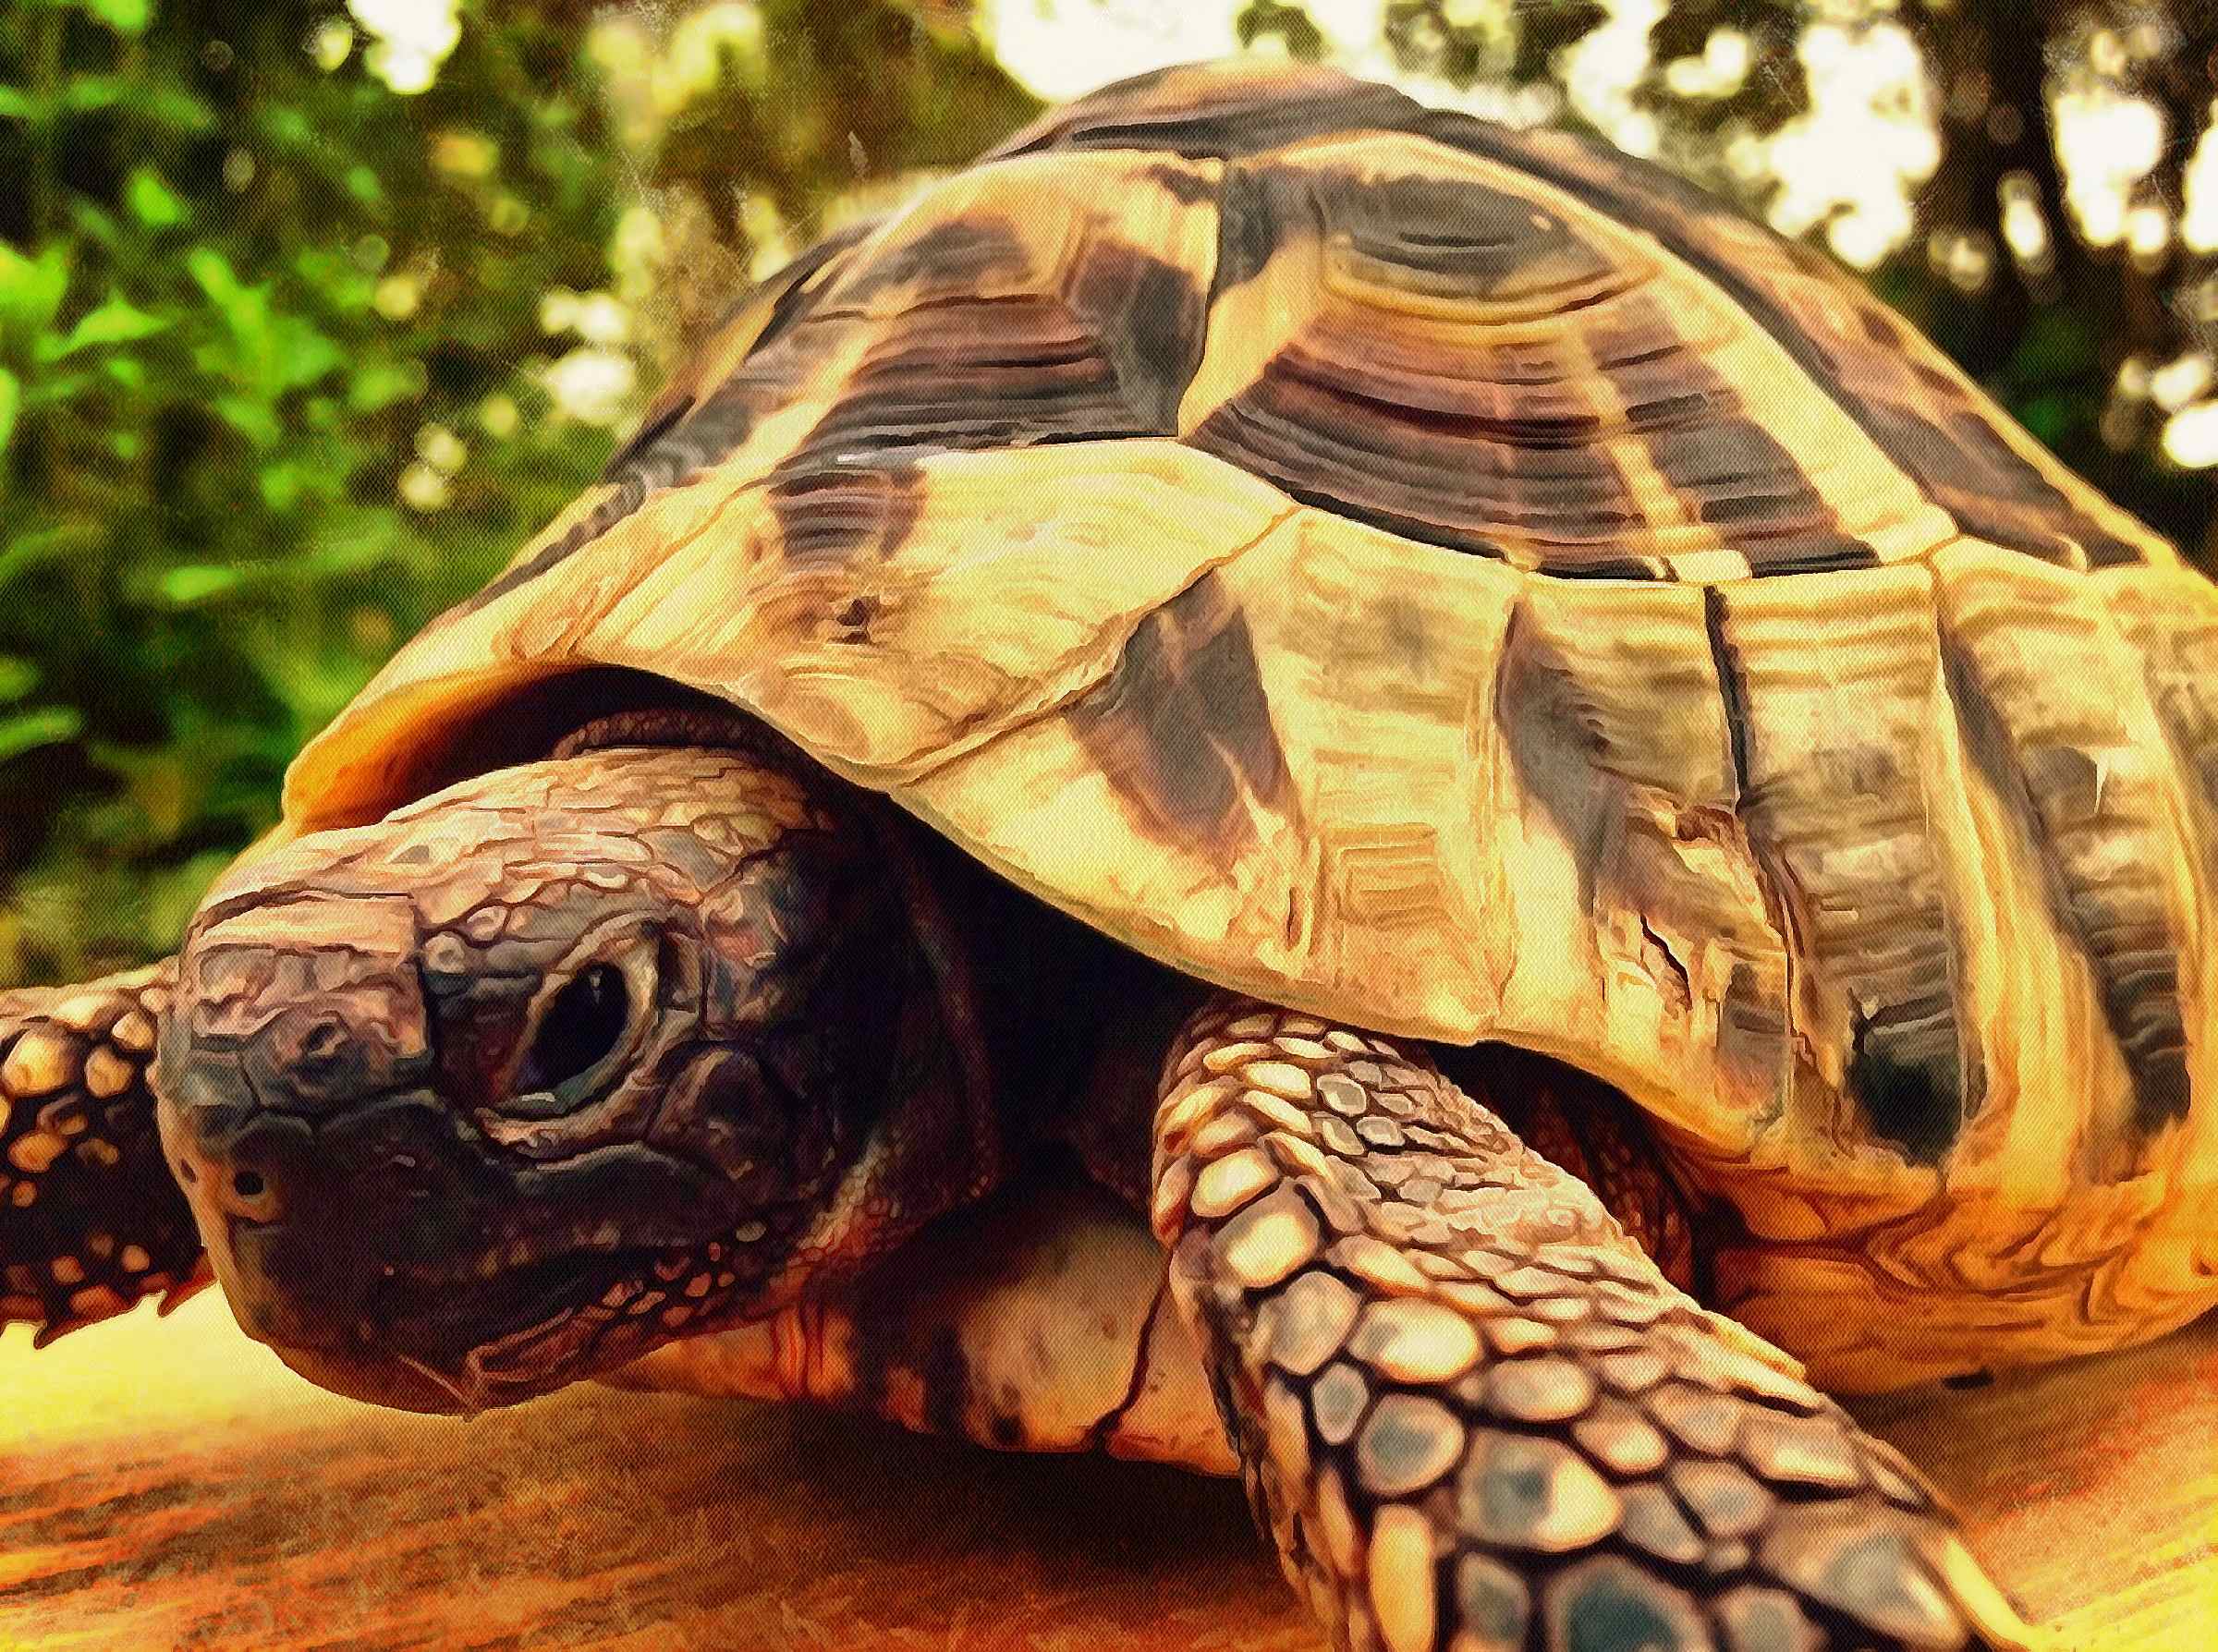 Tortoise, Turtle free images,  – Turtle public domain images, Tortoise free , Turtle stock free images, free images turtles, tortoise free , tortoise public domain images!